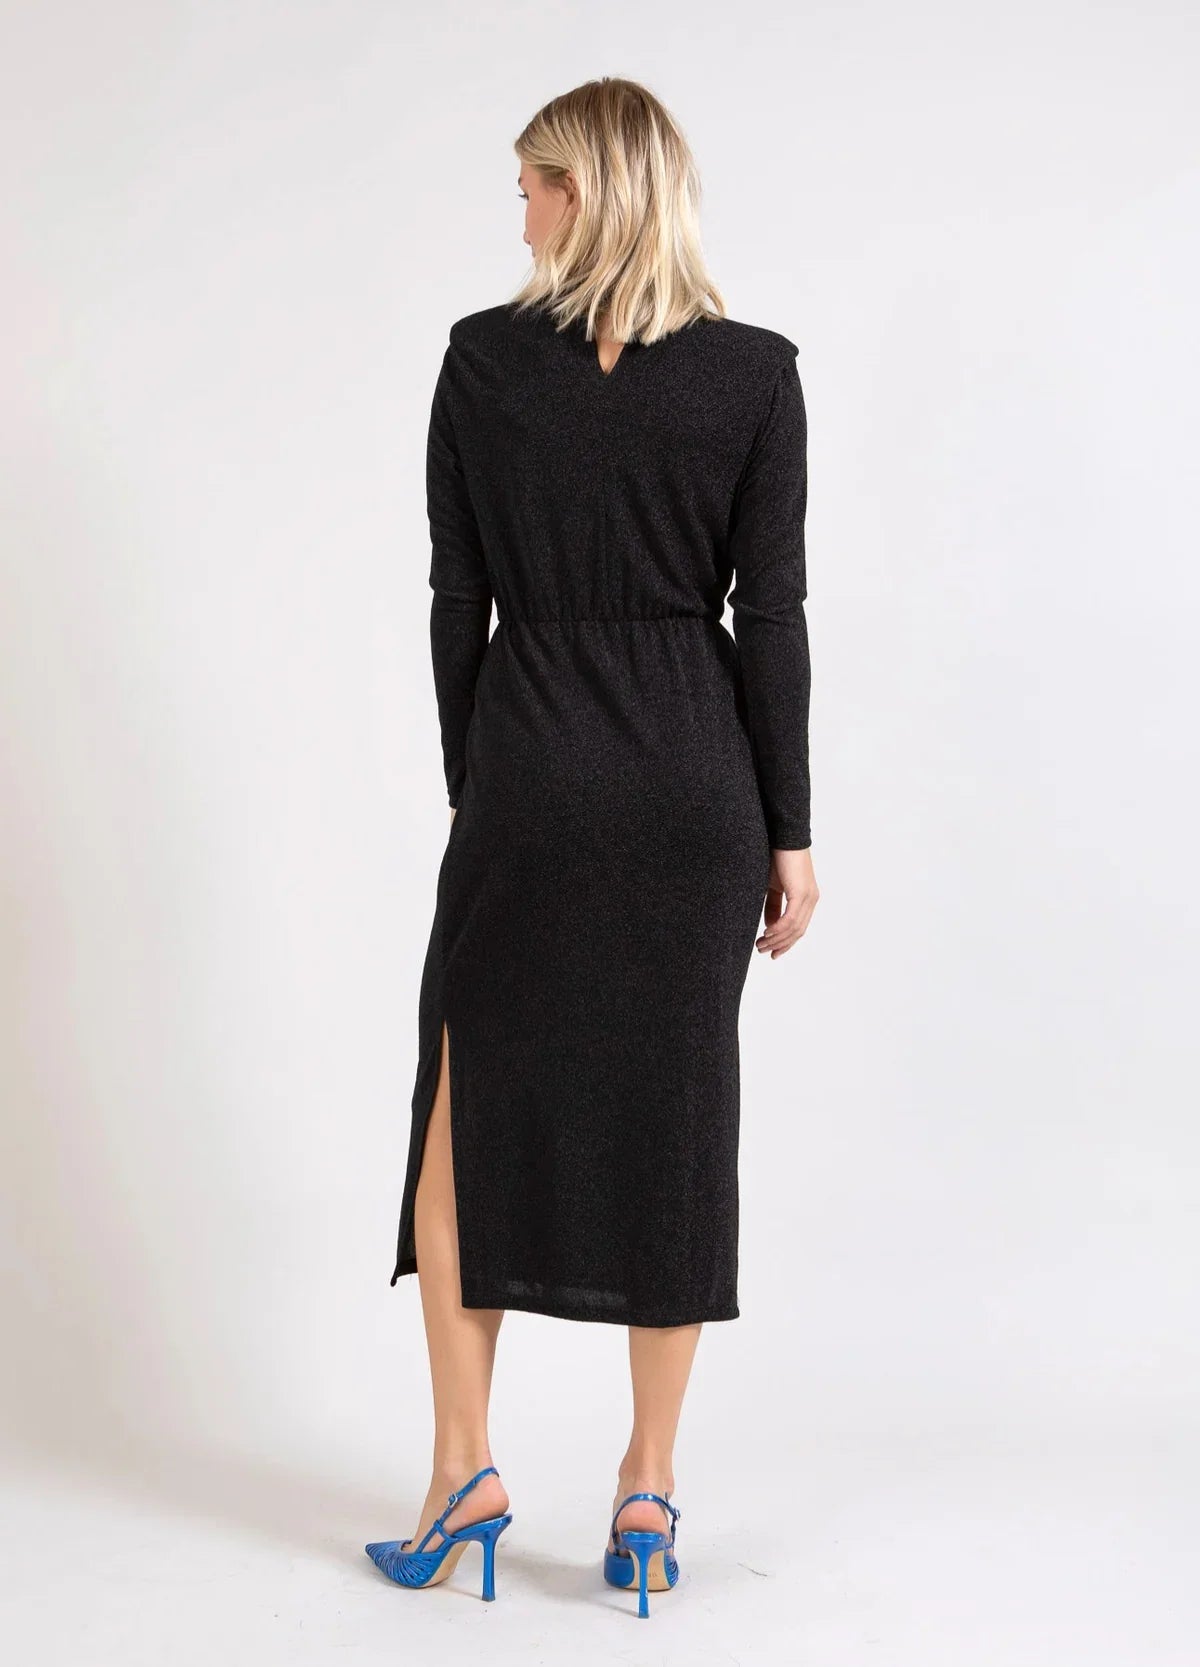 Coster Cophenhagen Shimmer Dress - Black